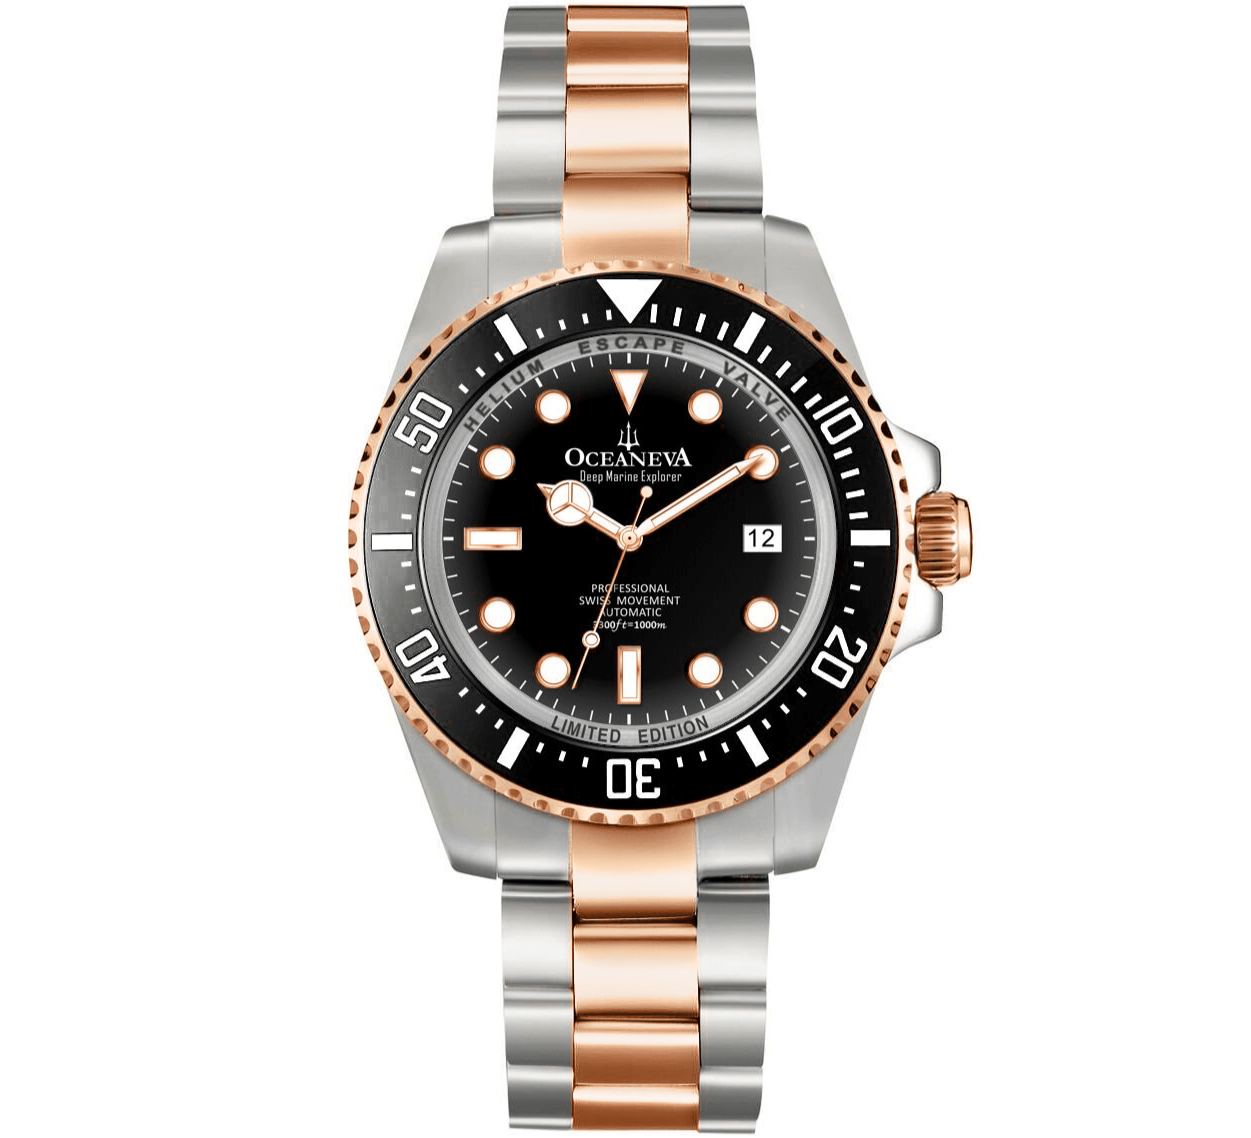 Oceaneva Men's Deep Marine Explorer 1000M Pro Diver Watch Black and Rose Gold - BK200BKSTRGD 1000M, 1000m Dive watch, 316L Stainless Steel, BGW9 Swiss Super-Luminova, Ceramic Beze, Dive Watch, Sw200-1 Swiss Automatic Movement